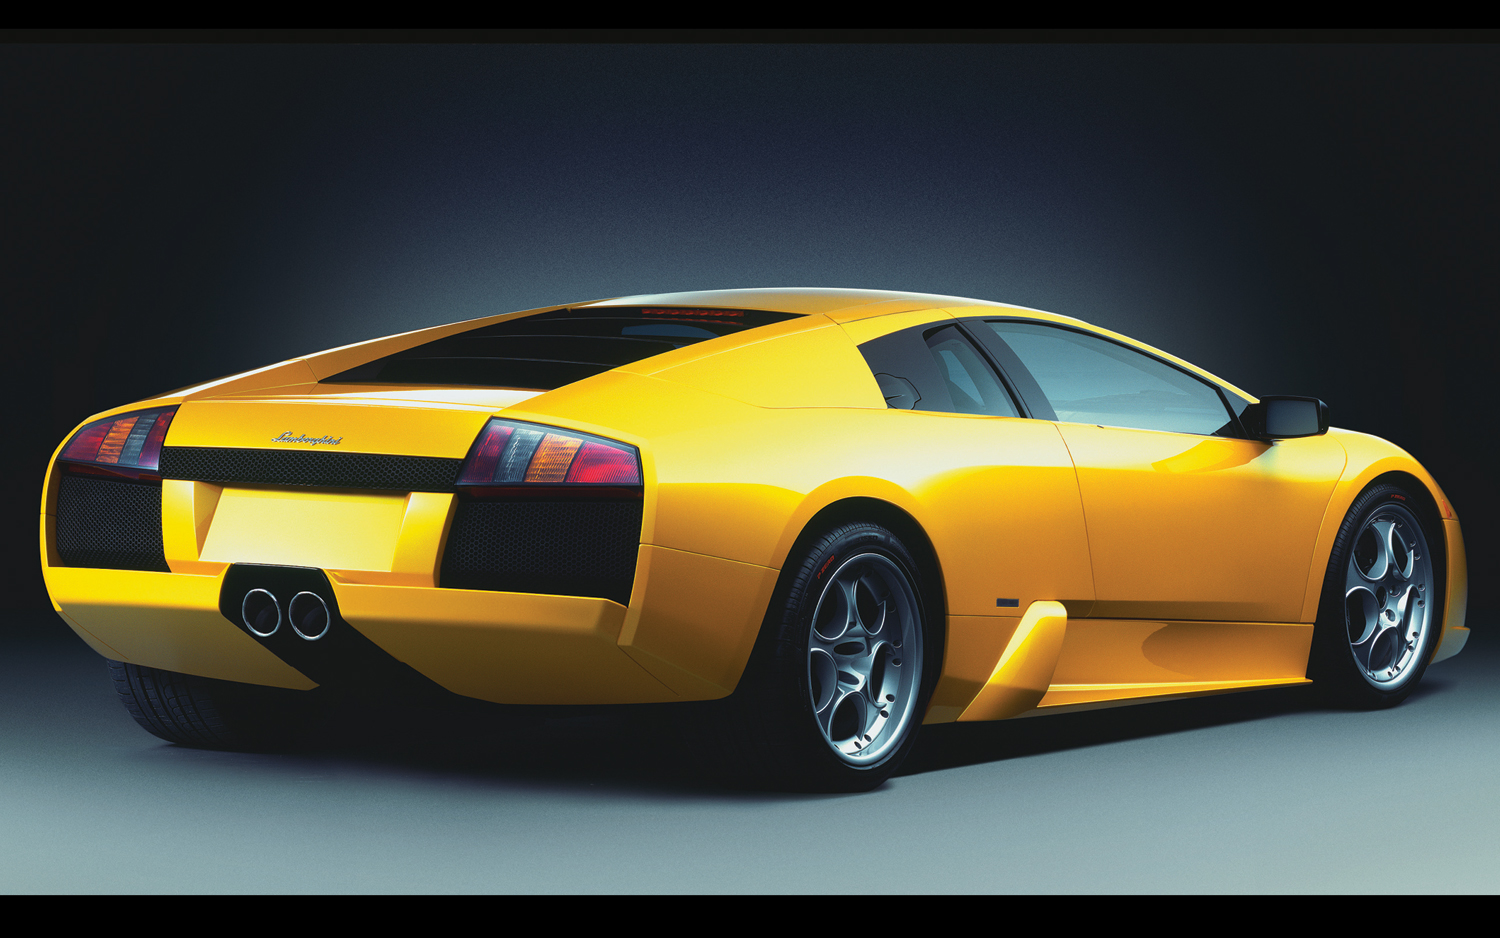 Amazing Lamborghini Murciélago Pictures & Backgrounds